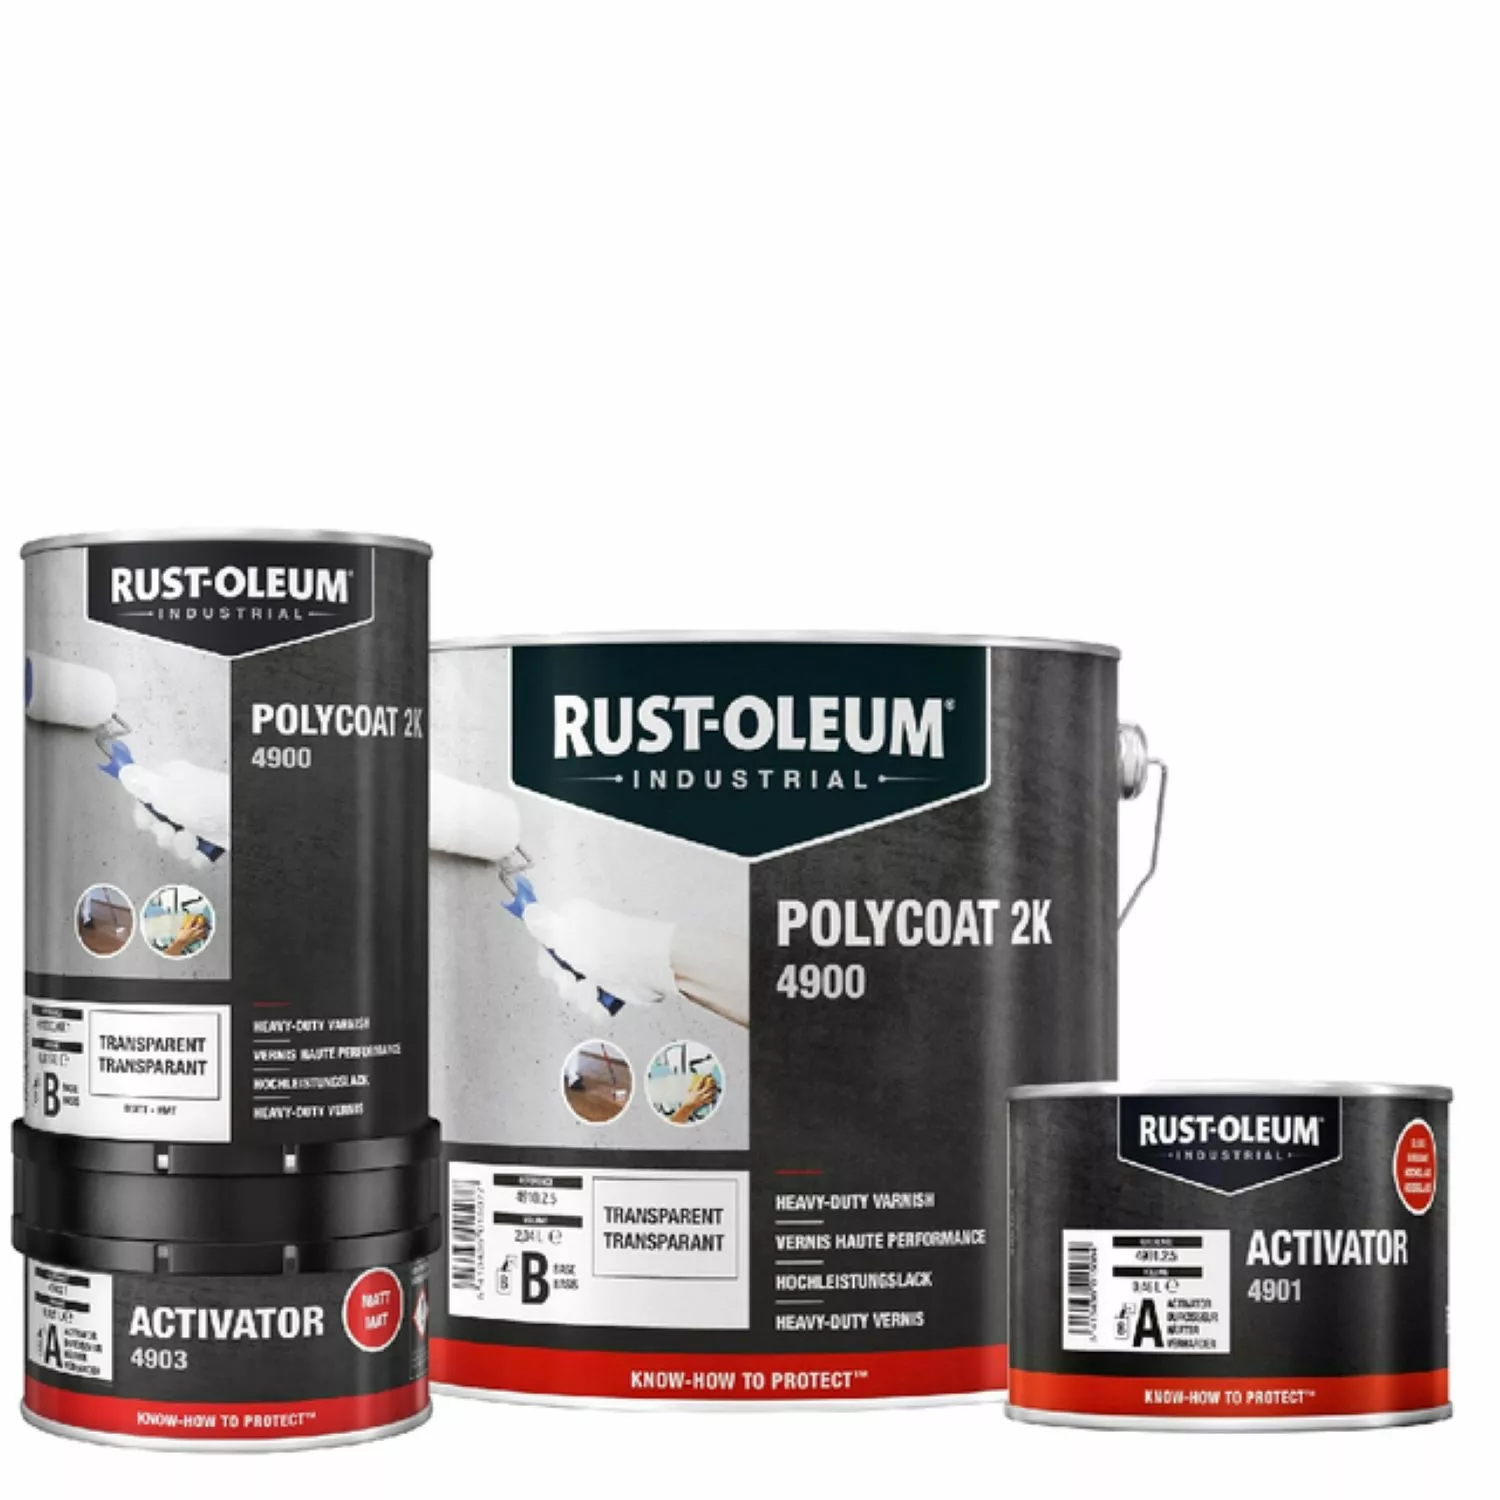 Rust-Oleum Polycoat 2K Heavy-Duty vernis - 2.5L